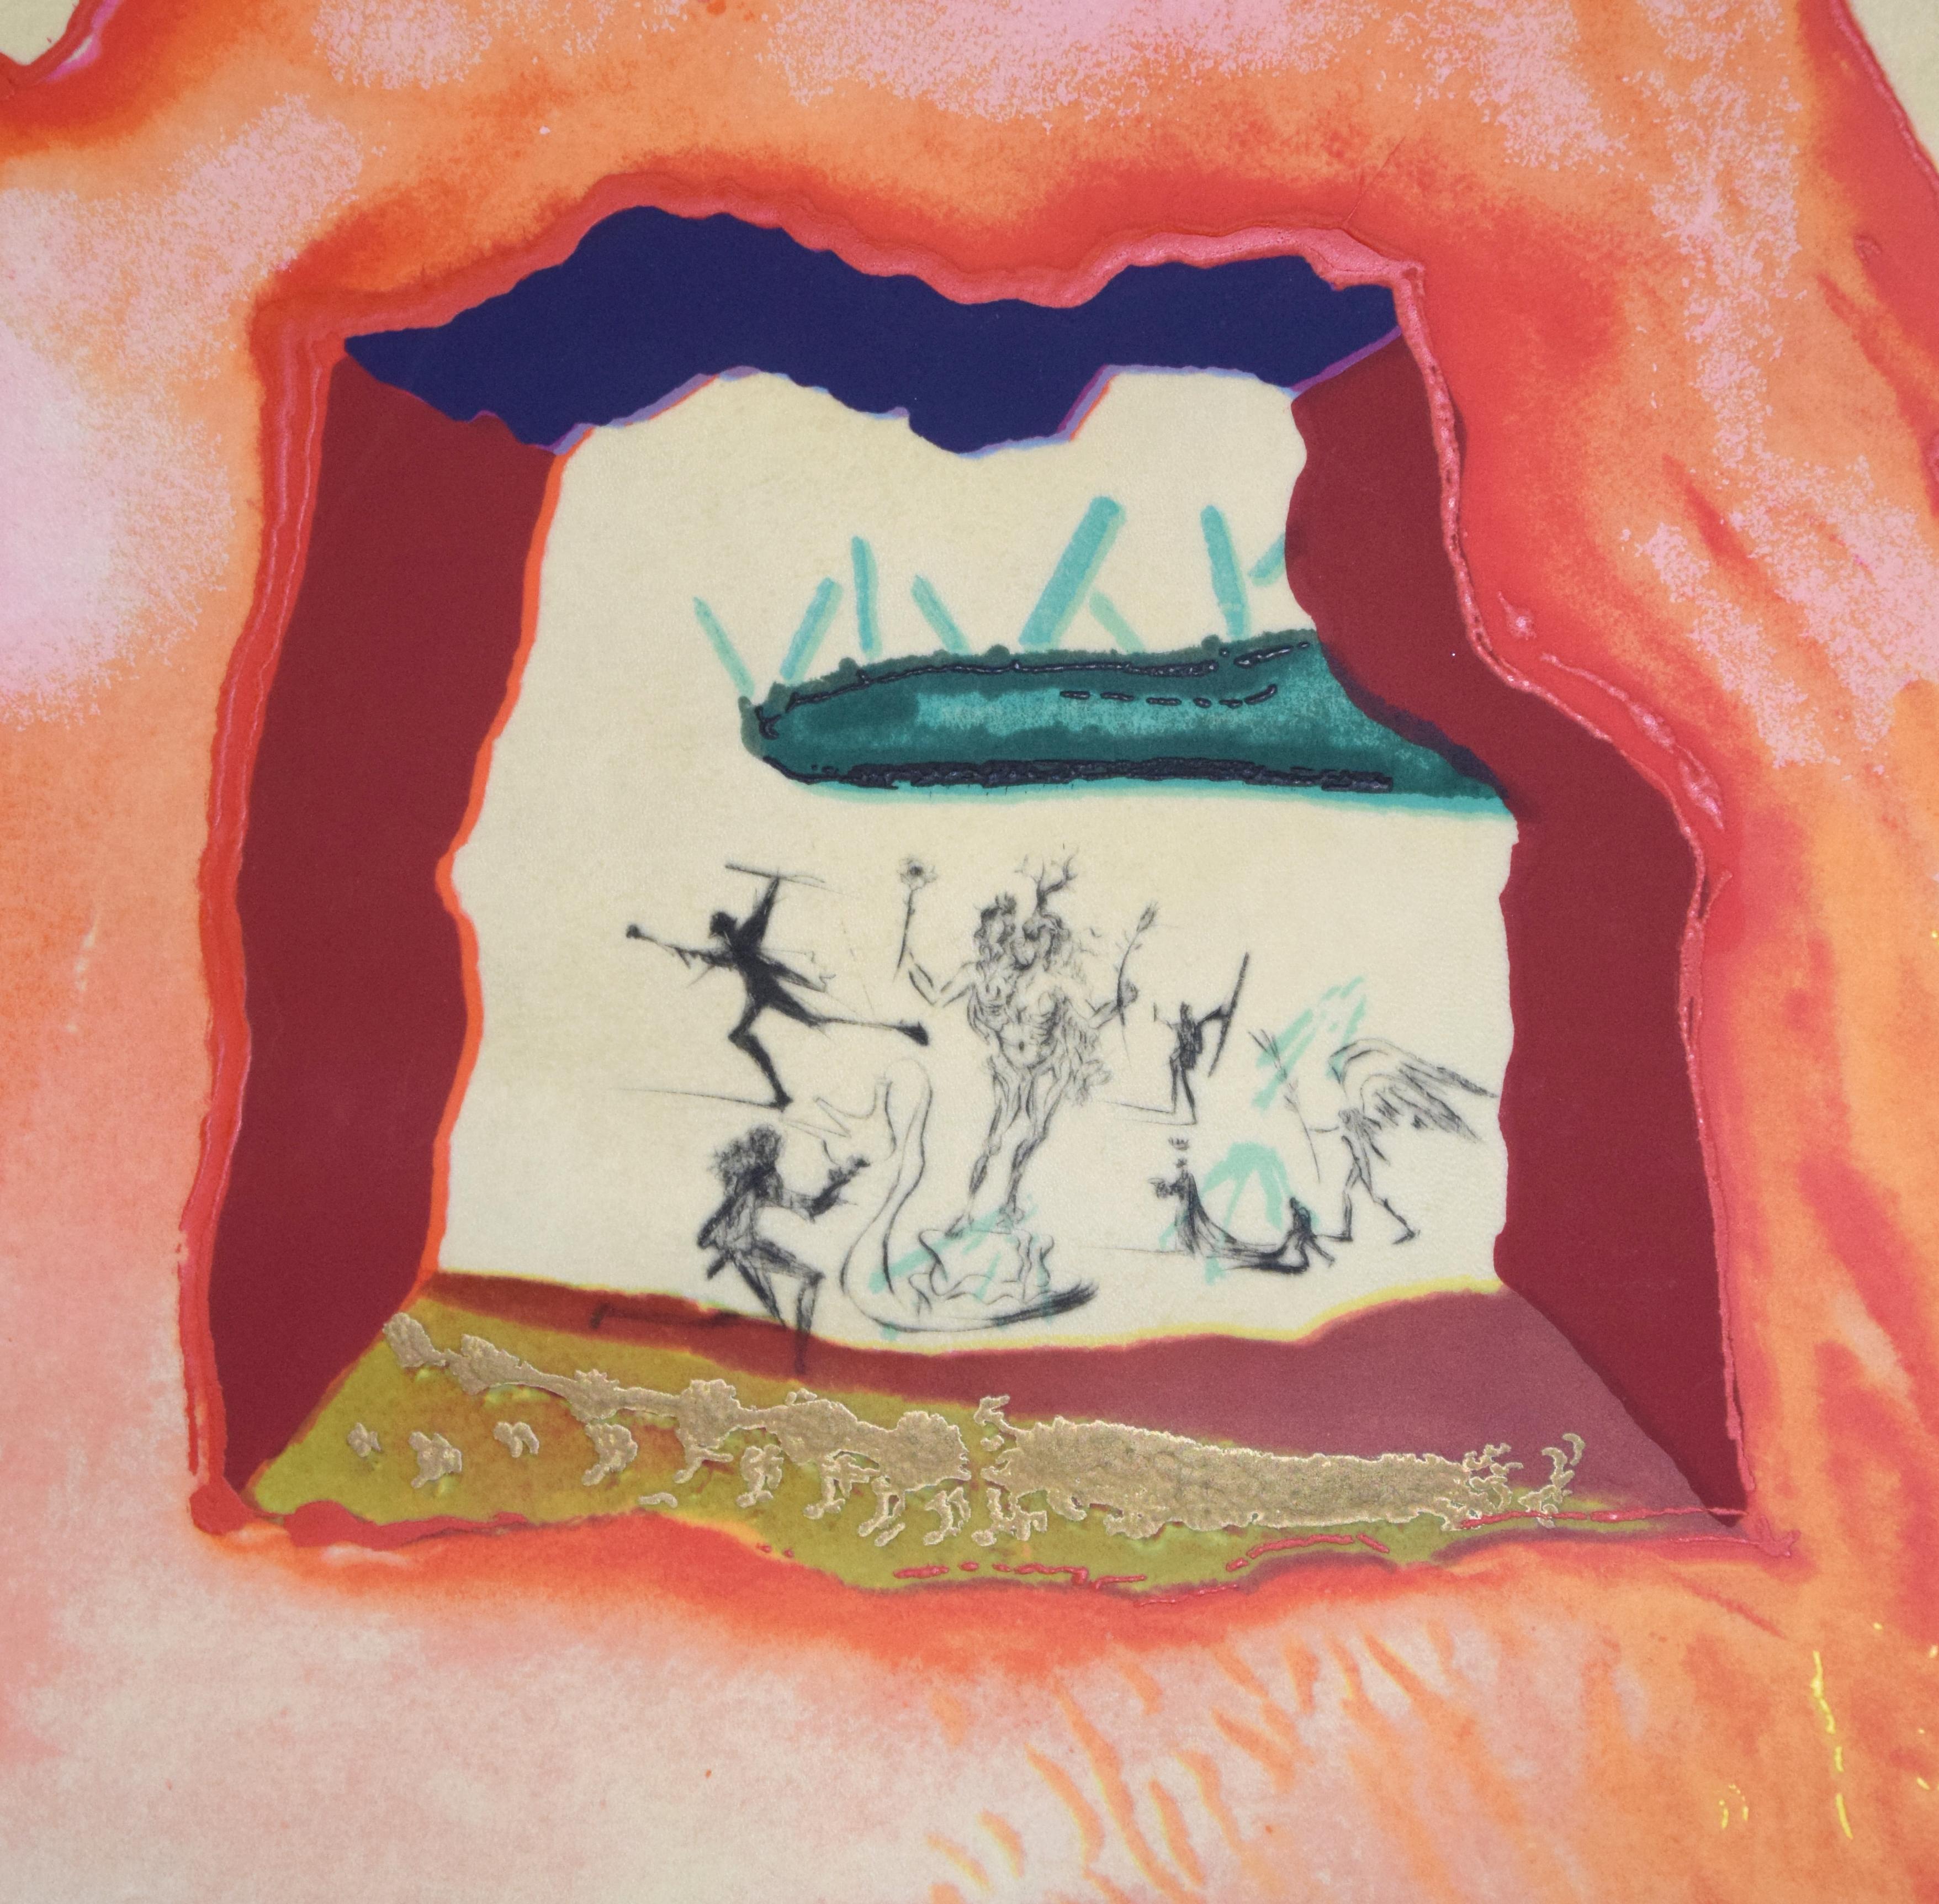 Le Creuset Philosophal - Original Mixed Media by Salvador Dalì - 1976 - Modern Mixed Media Art by Salvador Dalí